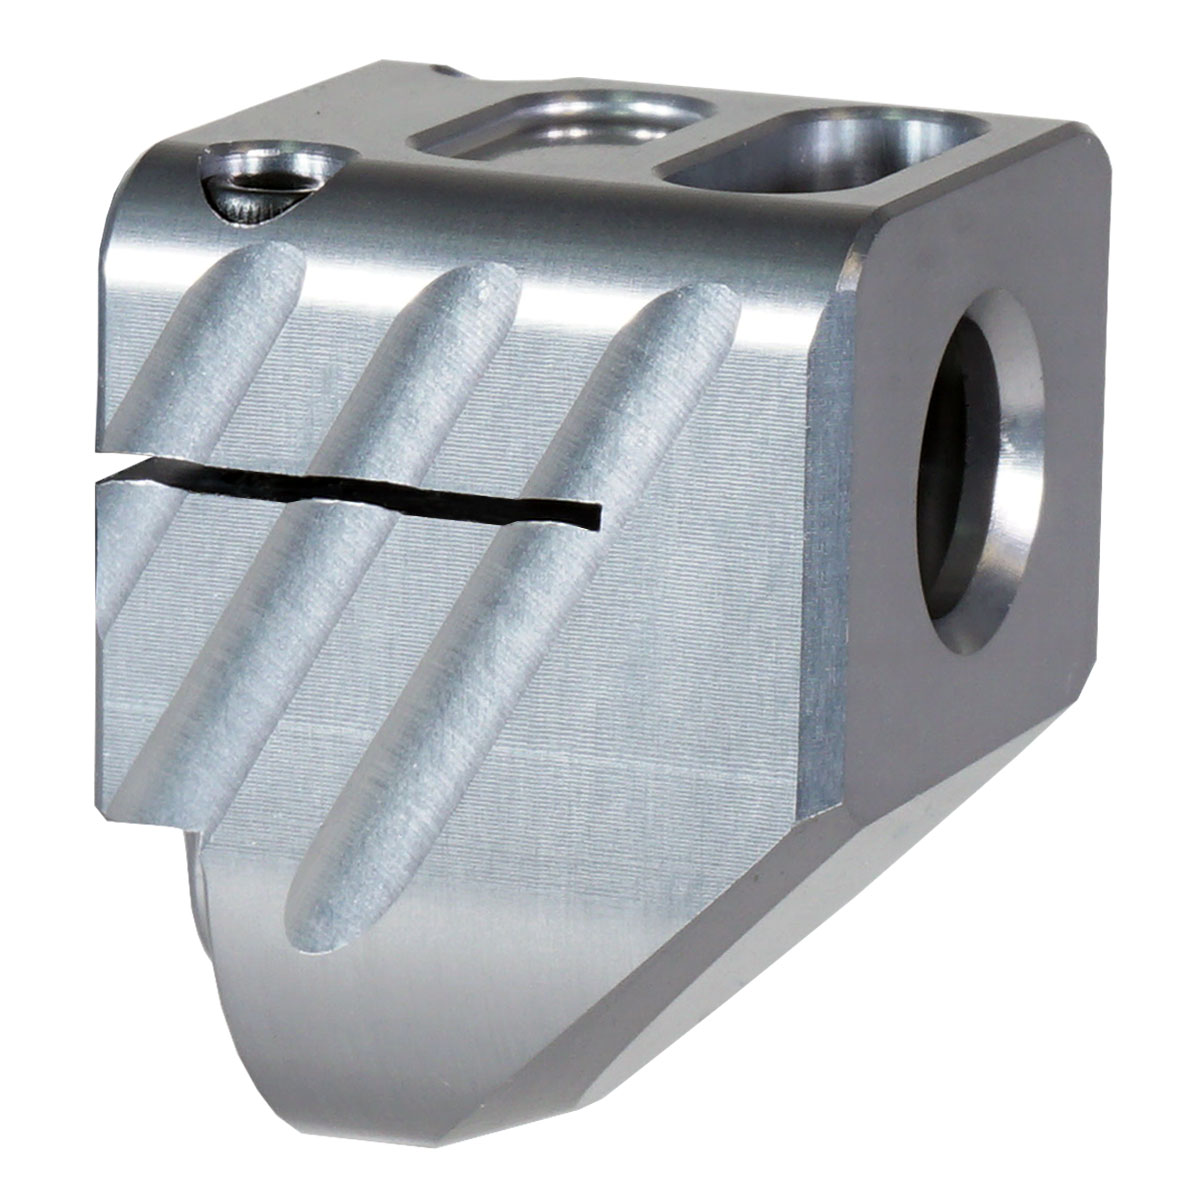 Mercury Precision Glock Compatible Compensator 6061 Aluminum, Anodized Type 2 Gray Single port comp, 1/2x28 with clamping set screws - BLEM